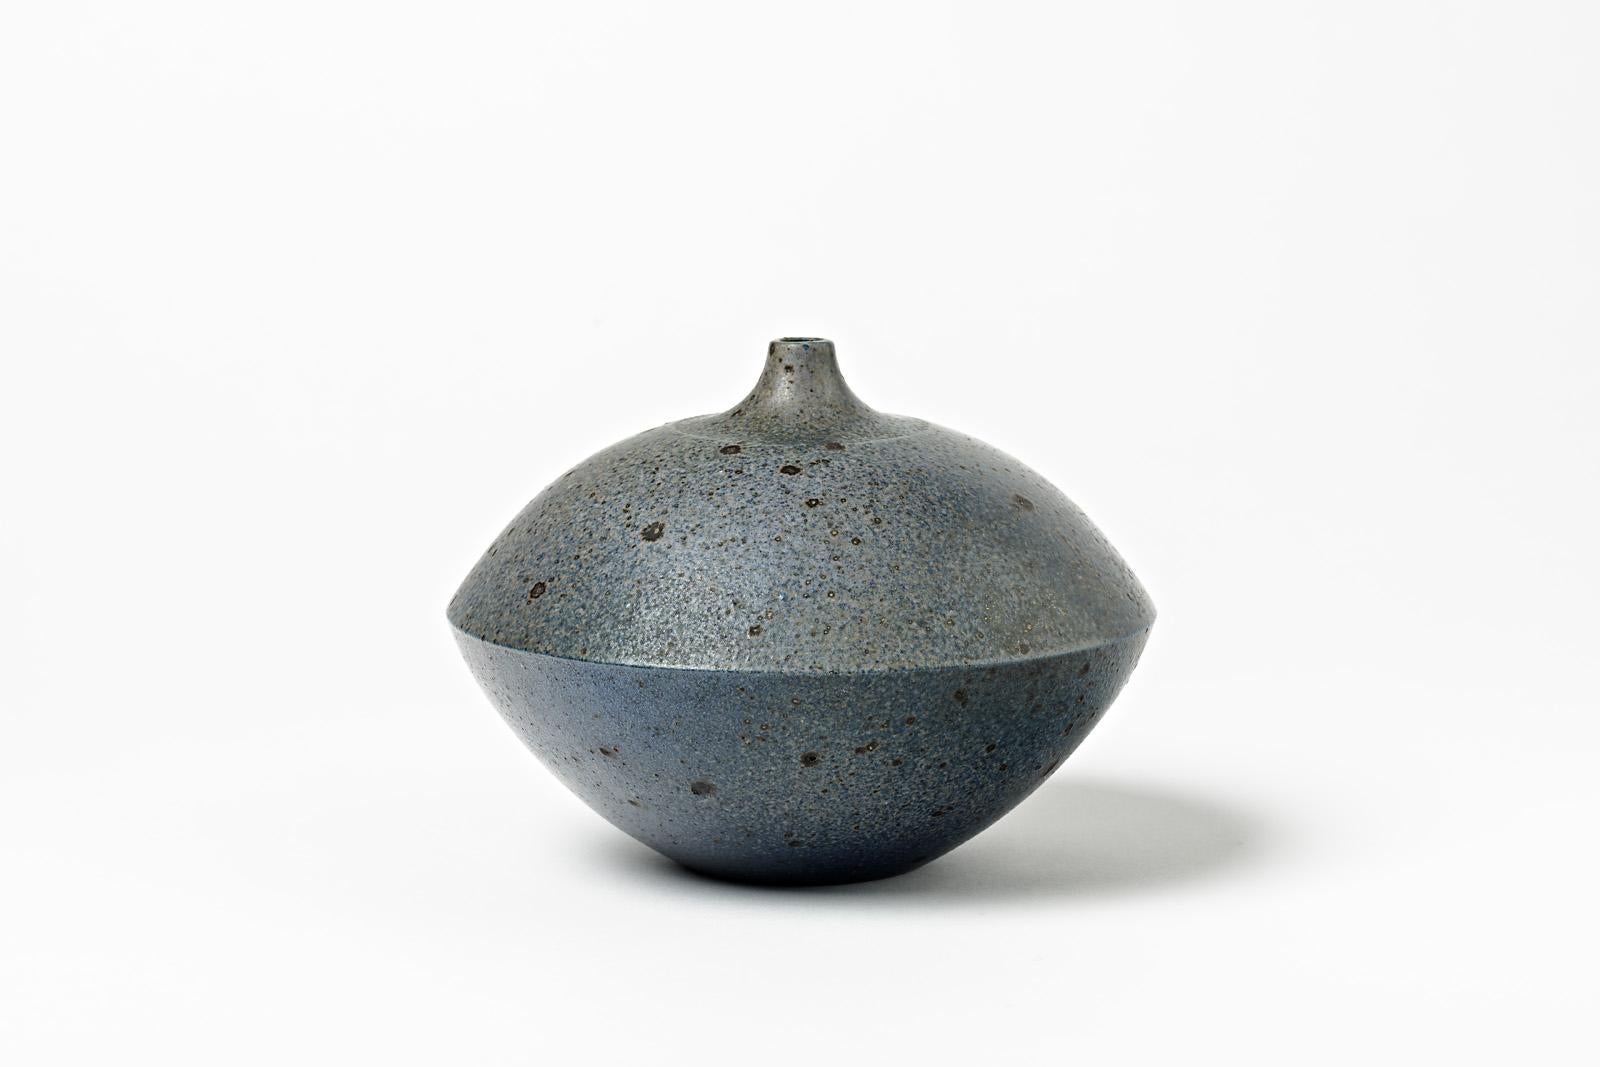 French Stoneware Vase with Blue-Grey Glazes Decoration by Robert Deblander, 1970